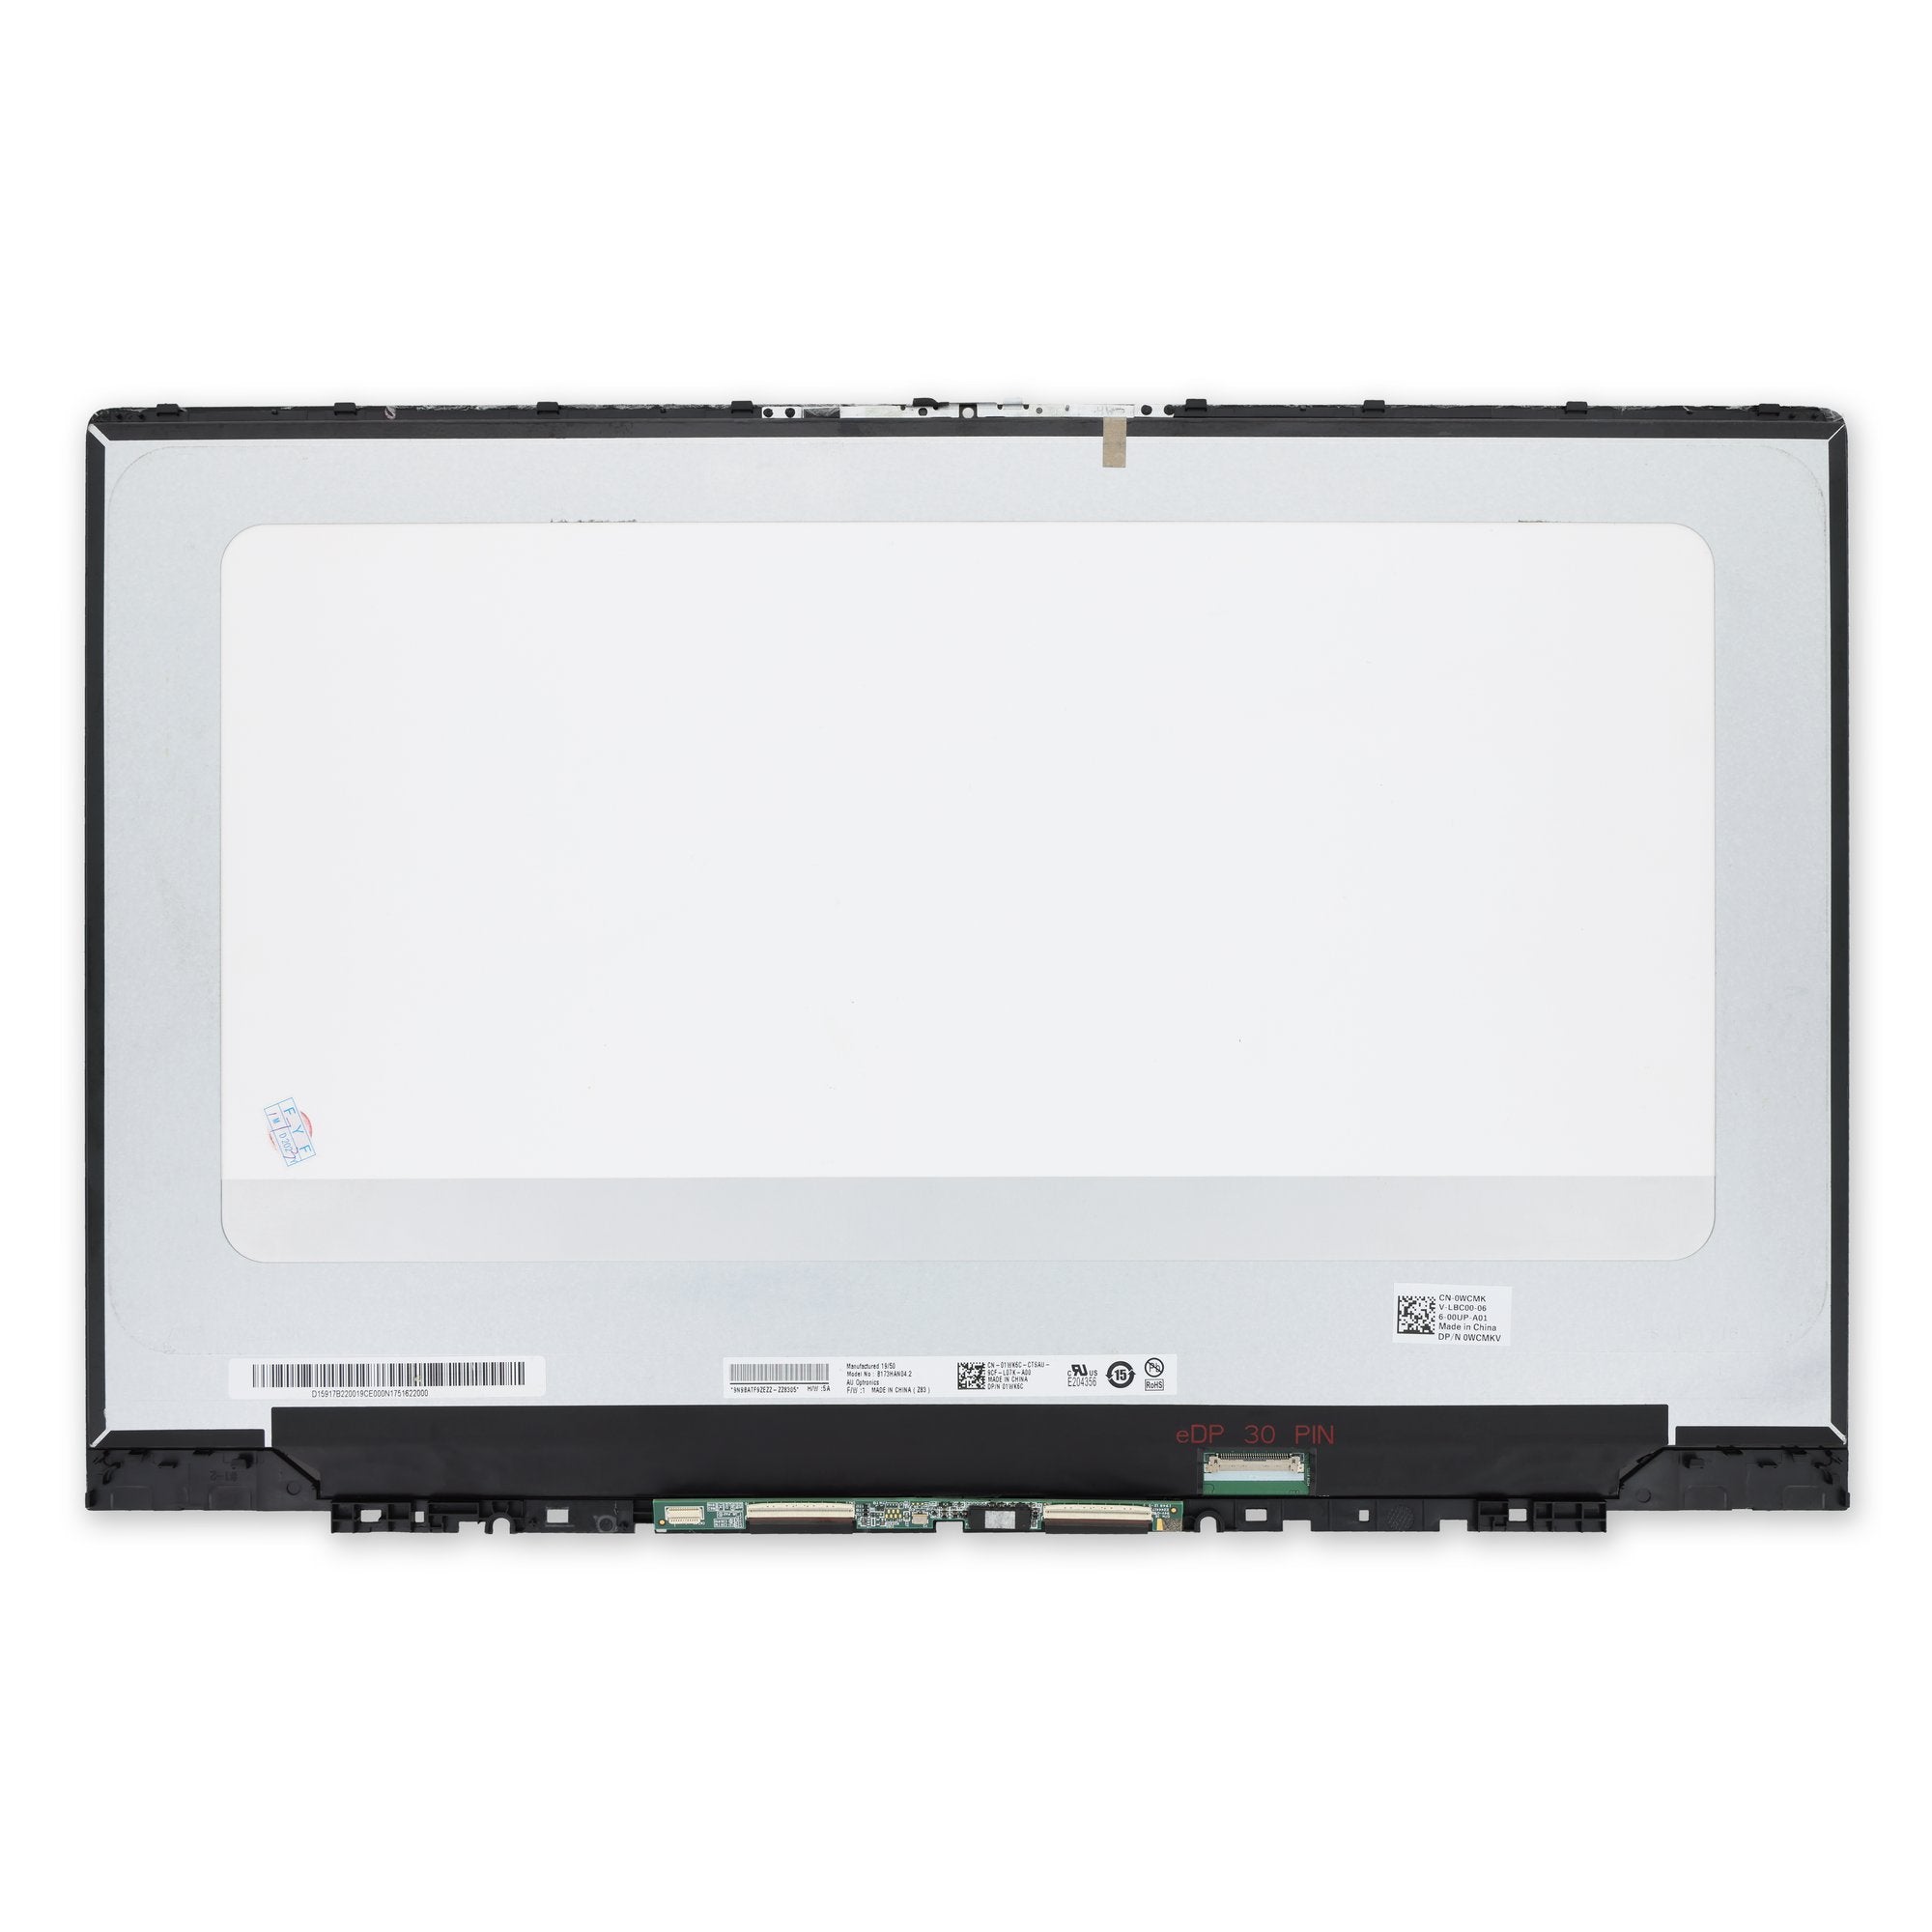 Dell Inspiron 17-7791 LCD Display - WCMKV New